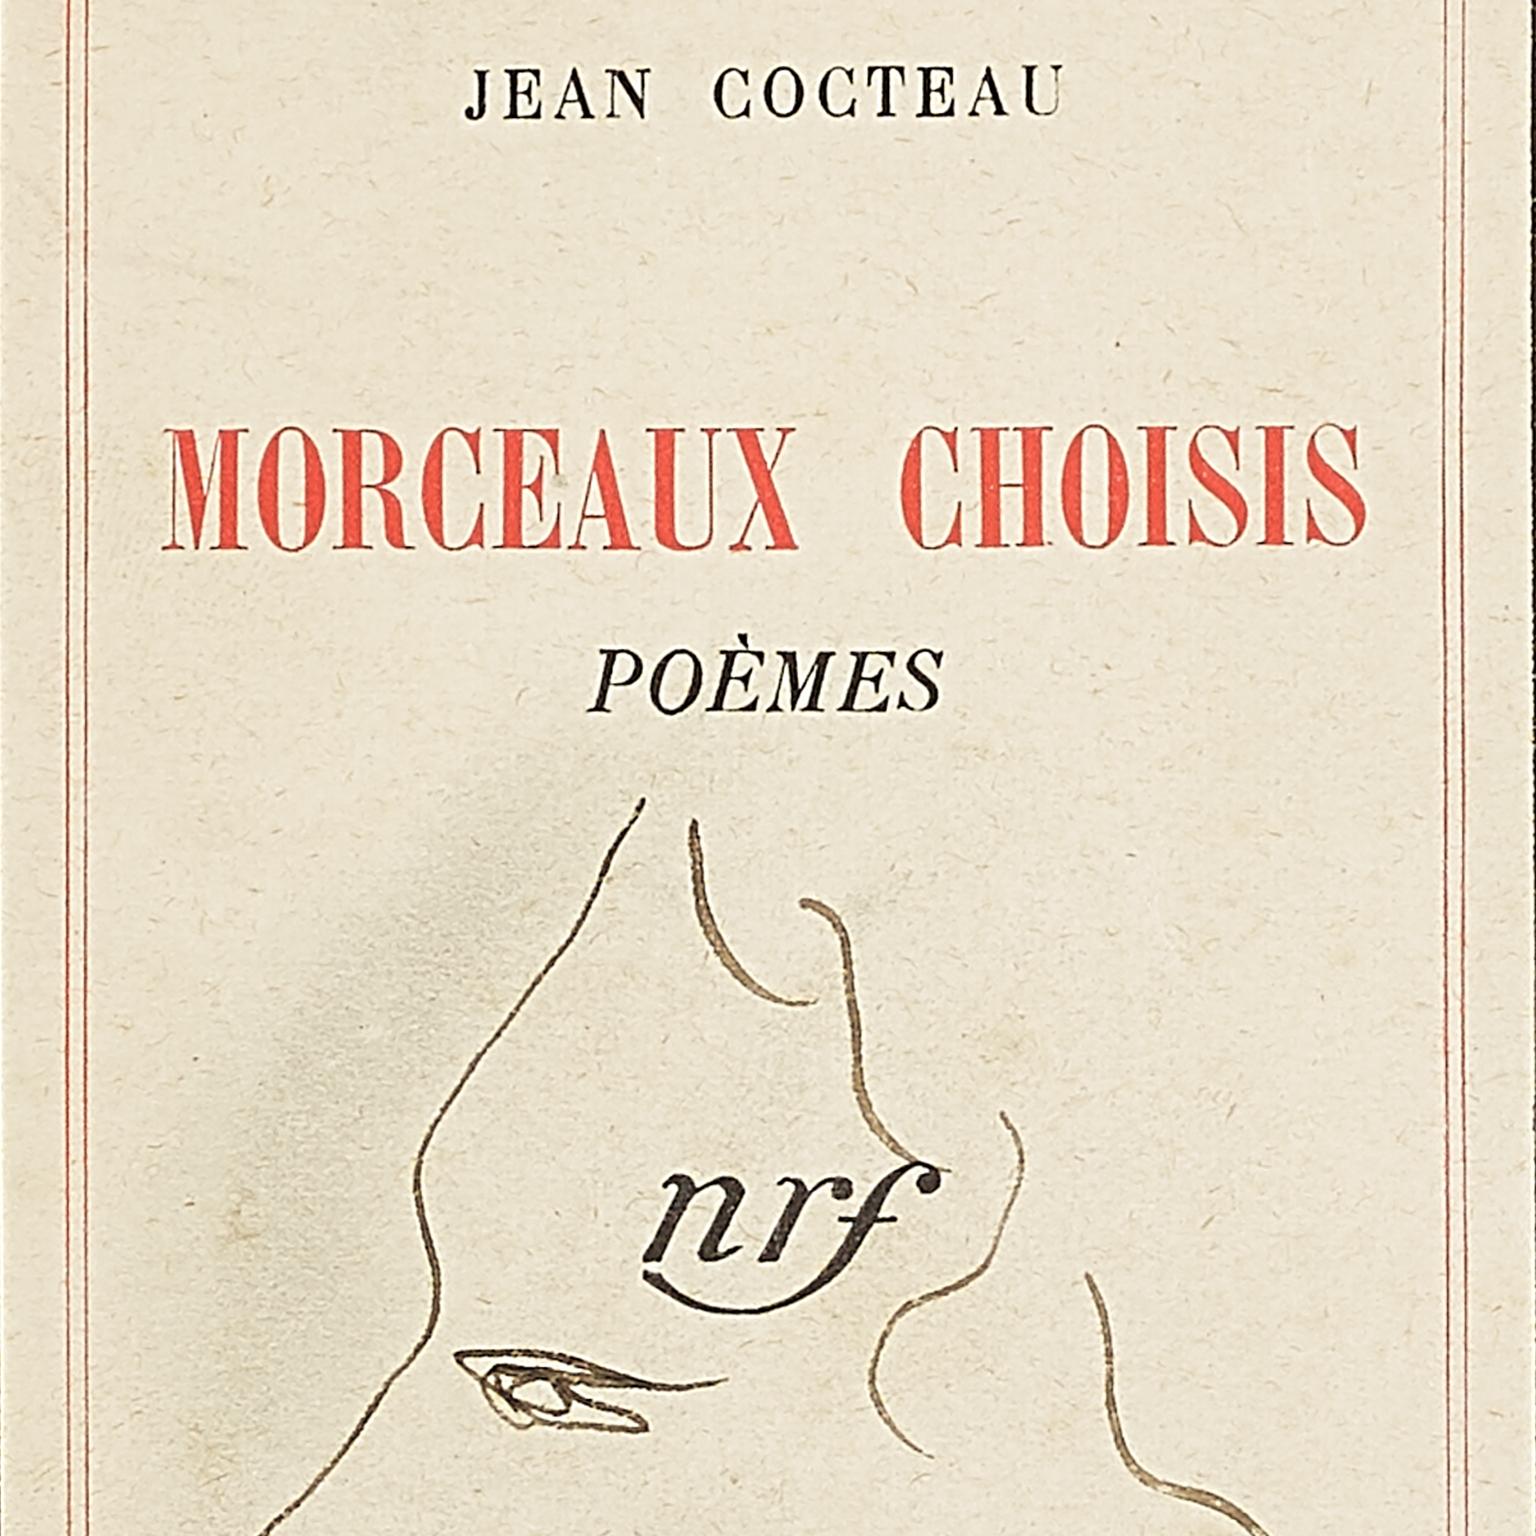 Jean Cocteau ( 1889-1963 )
